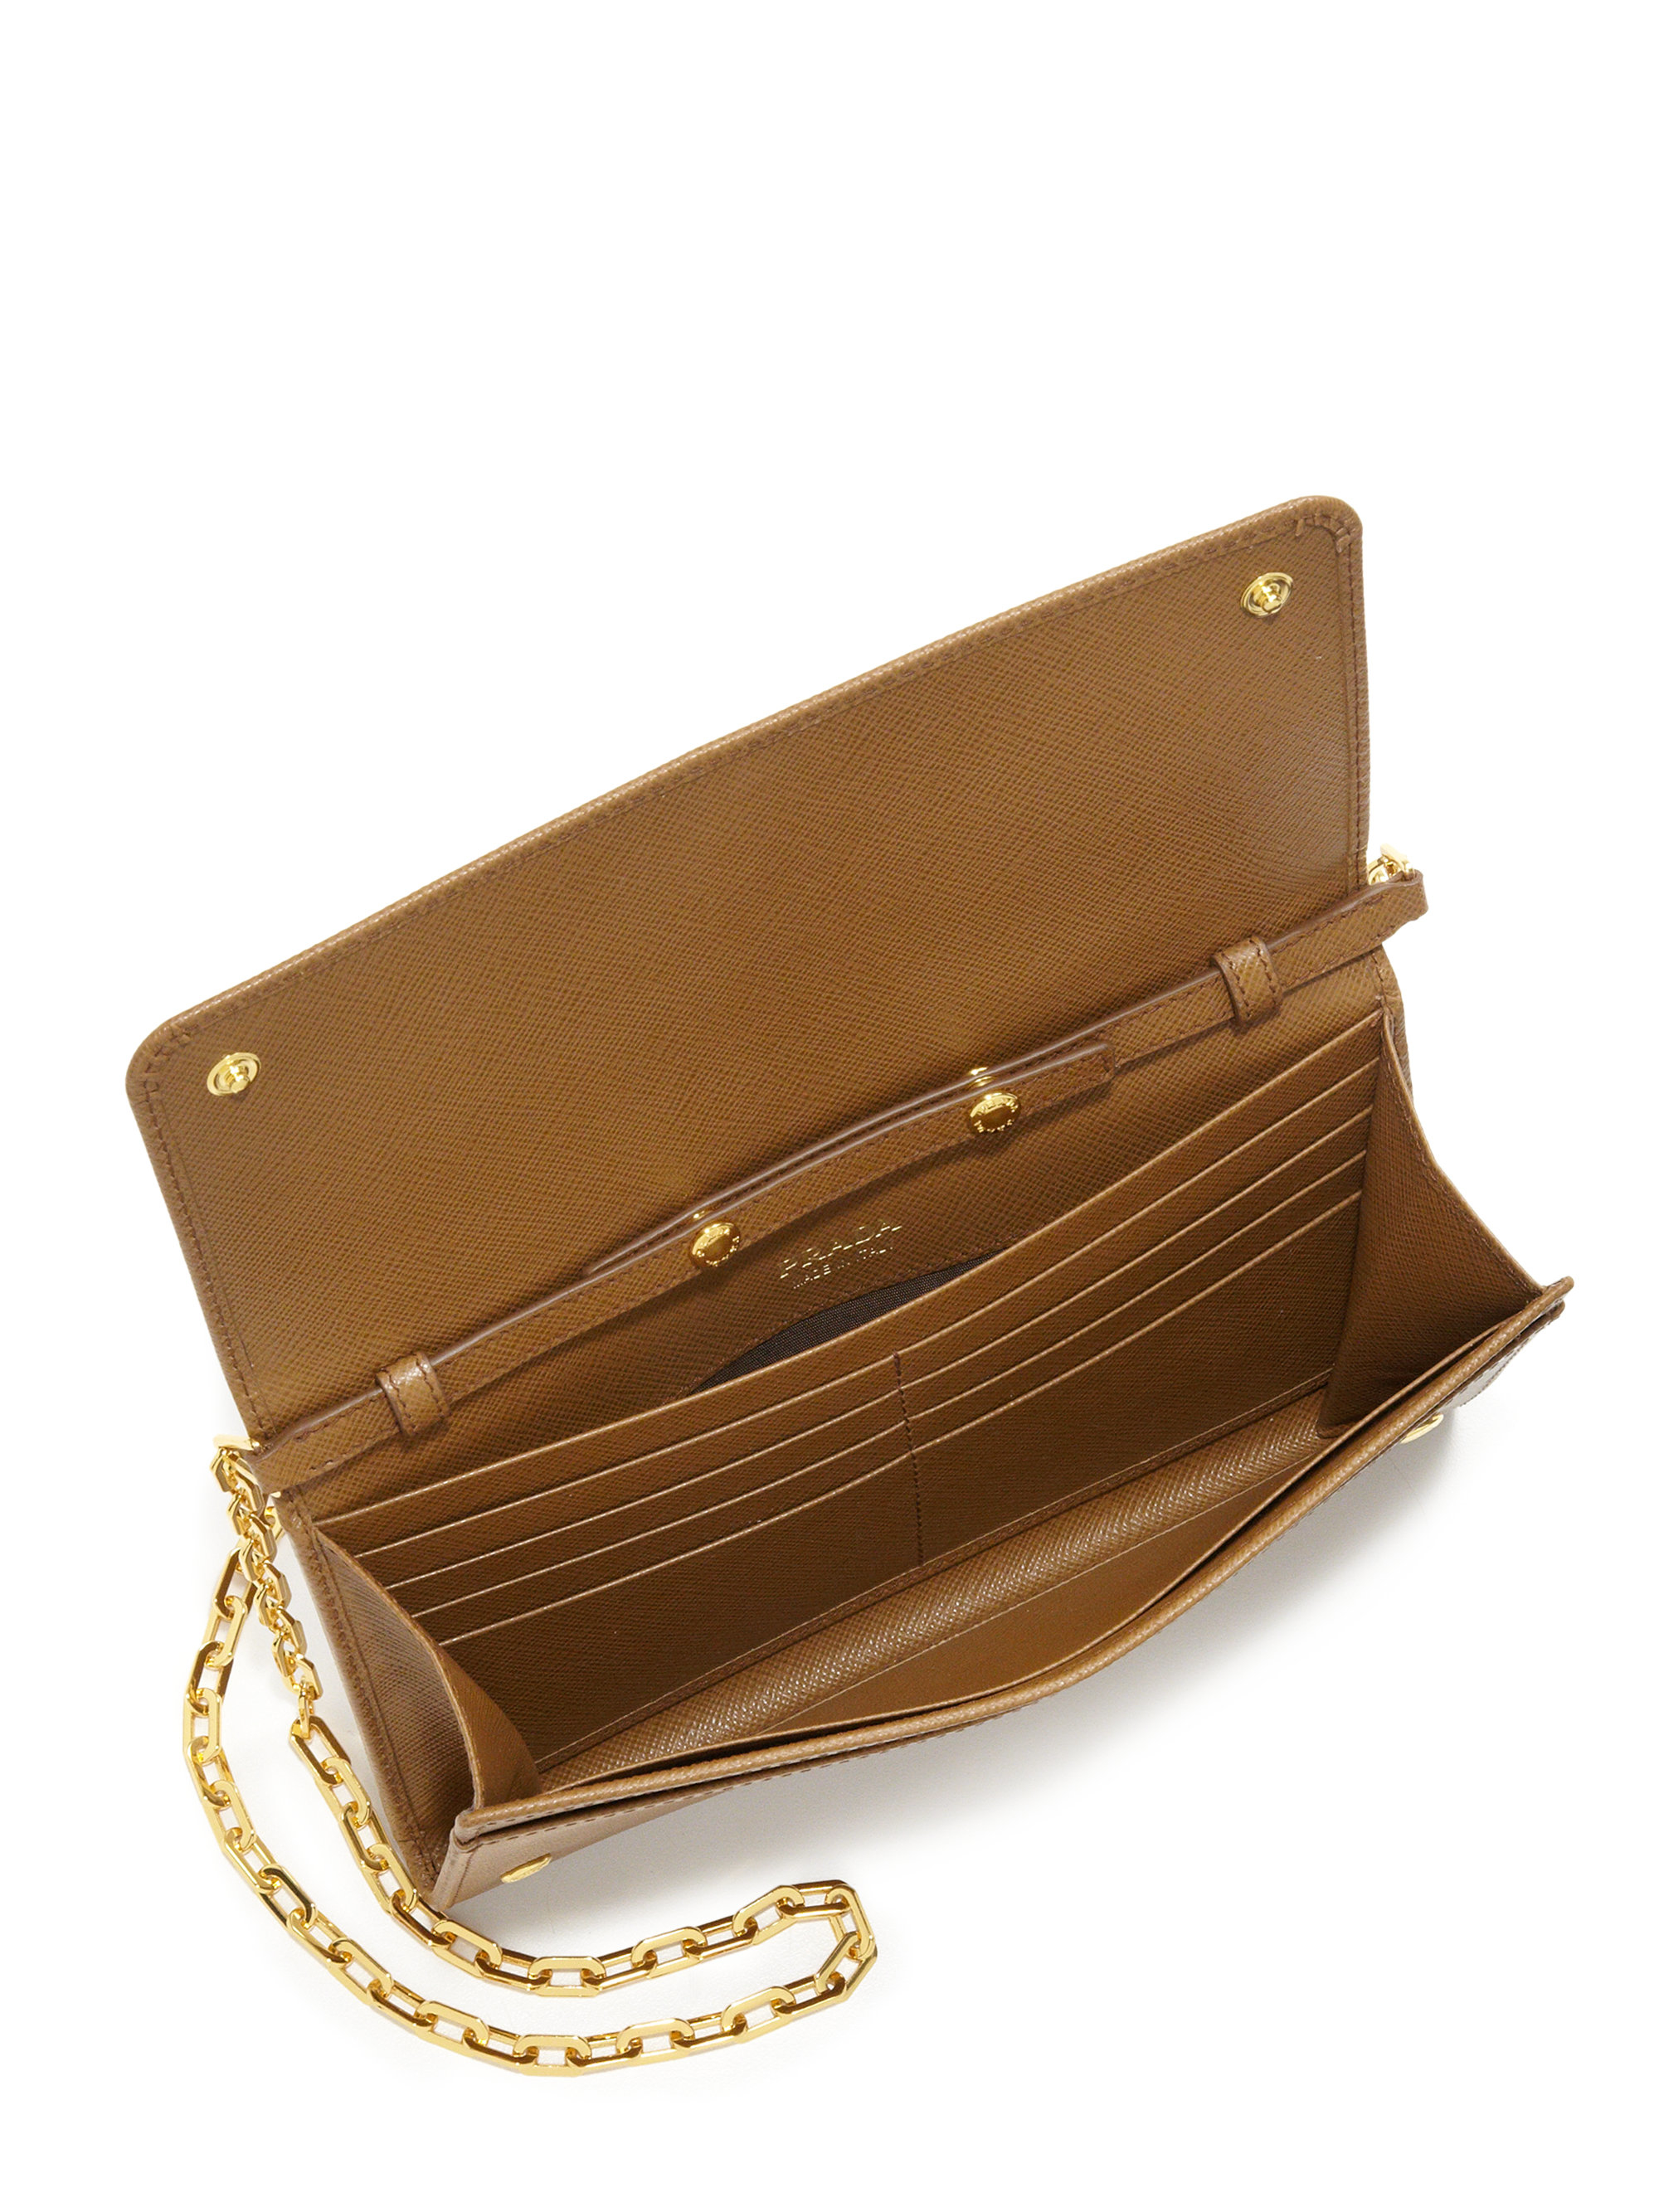 Prada Saffiano Leather Chain Wallet in Brown (cannella) | Lyst  